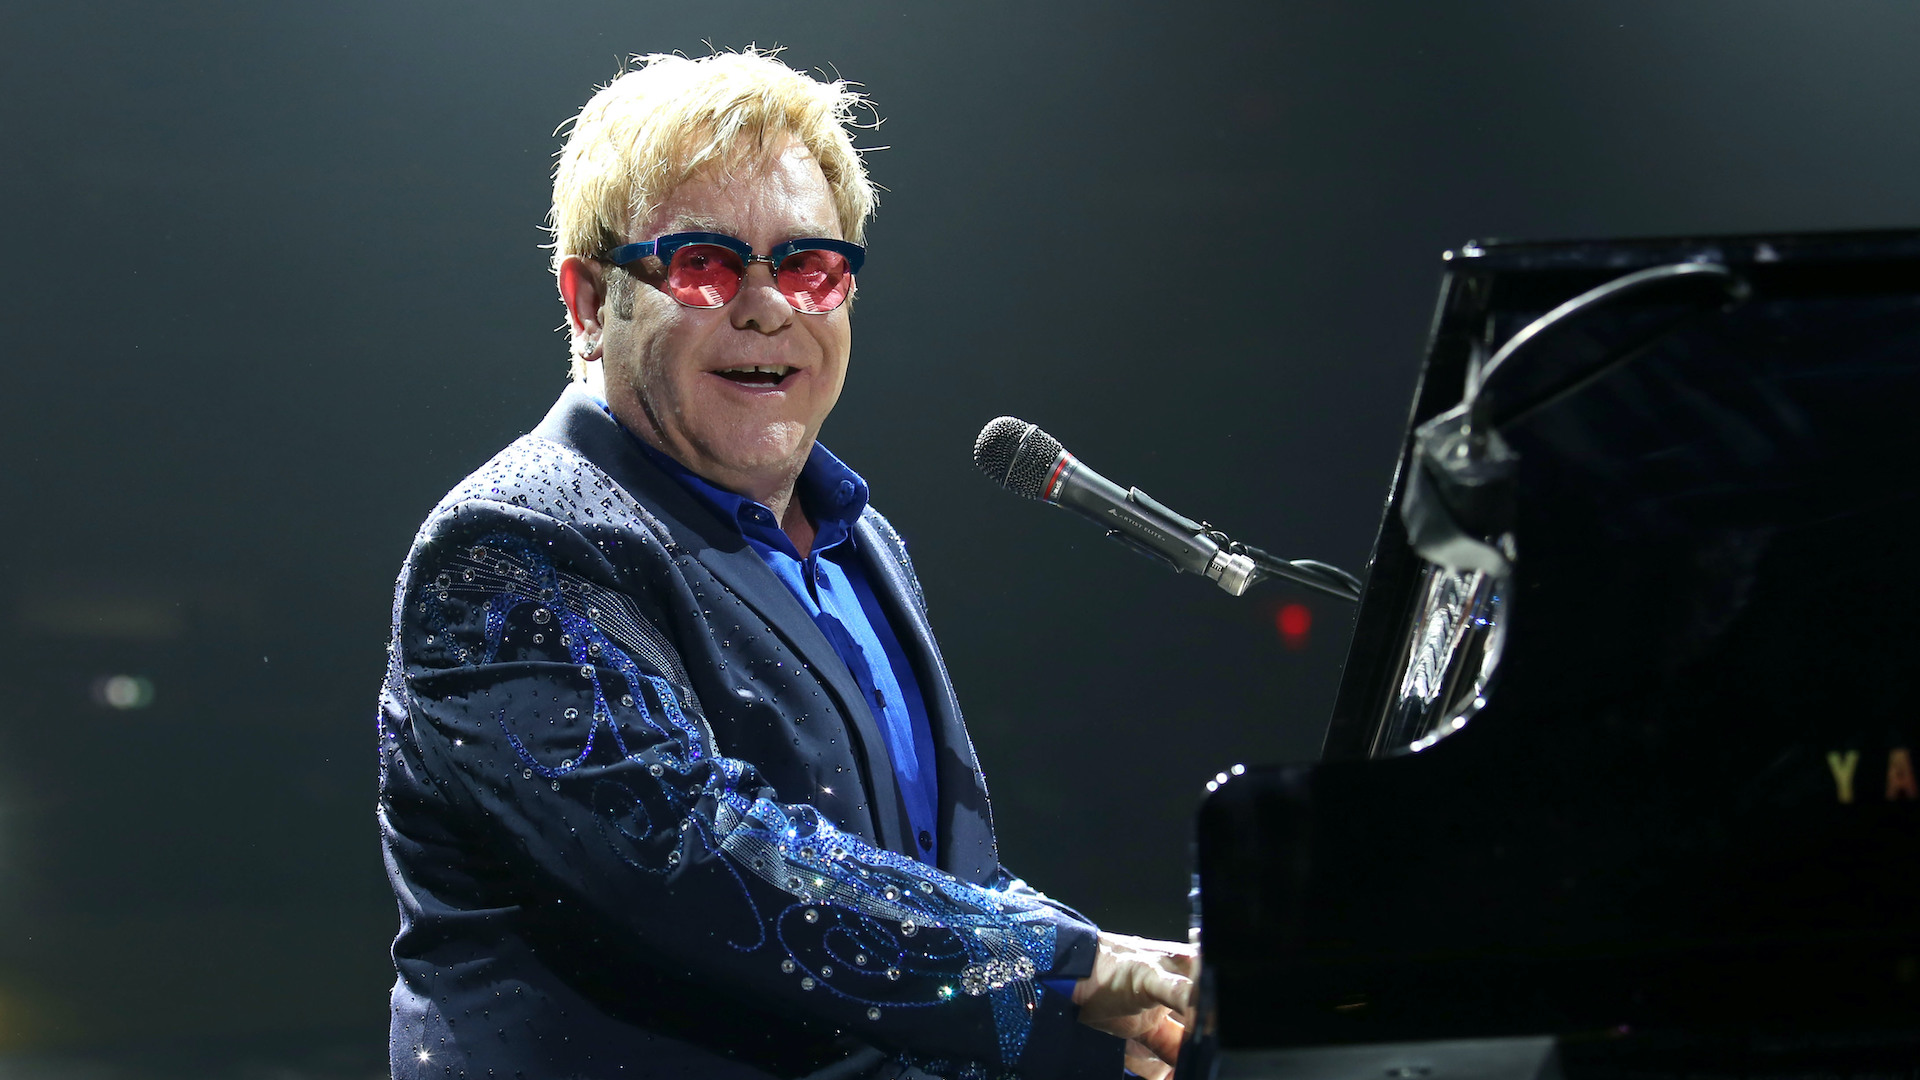 Sir Elton John performs in concert at Madison Square Garden